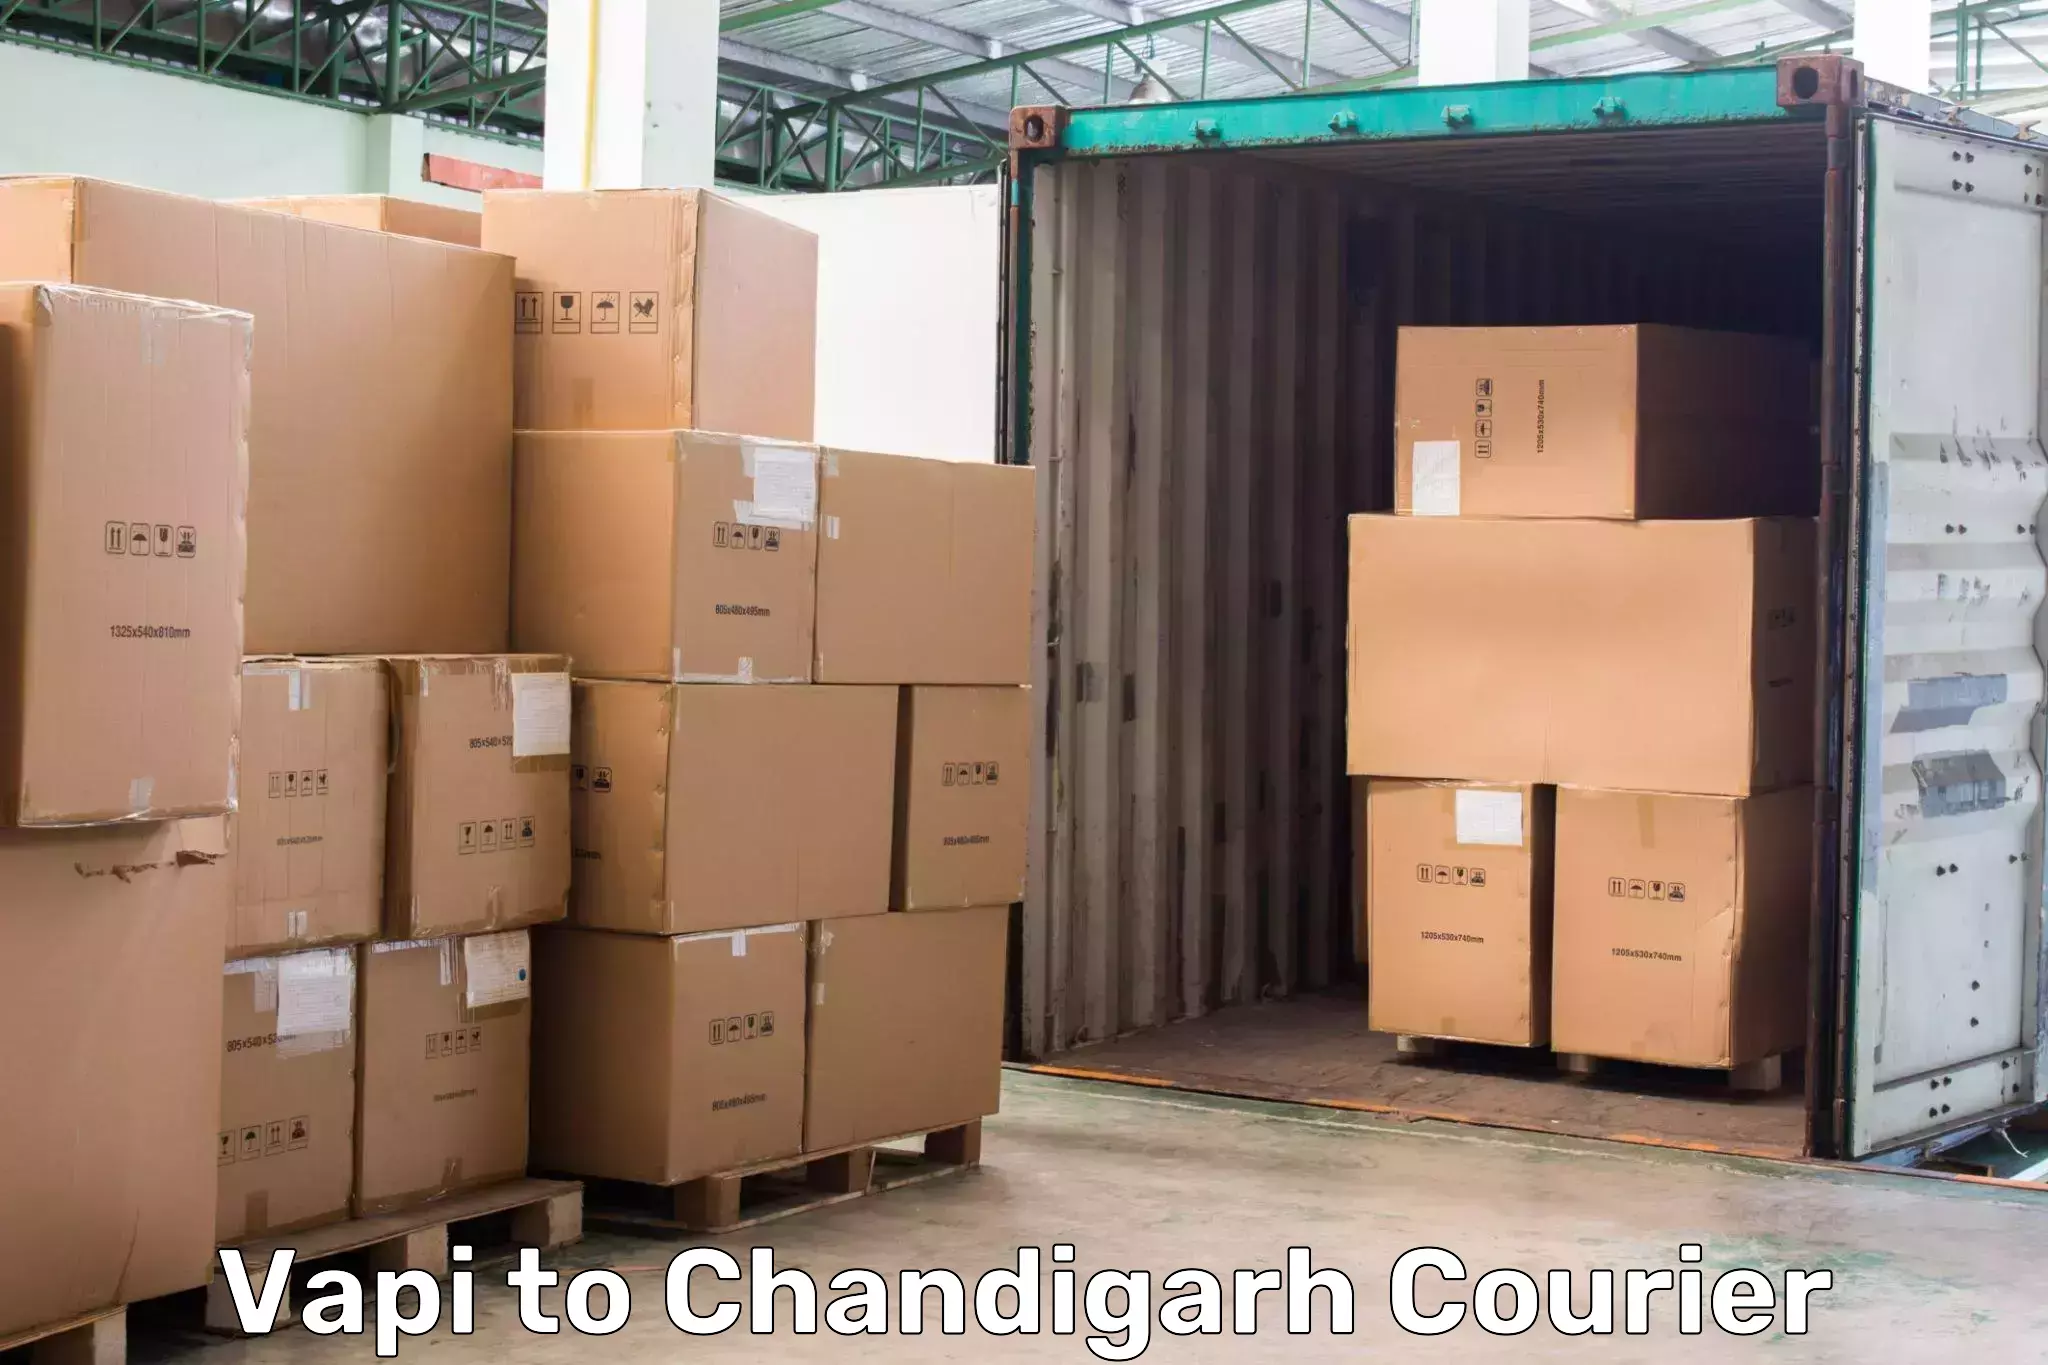 Global logistics network Vapi to Chandigarh